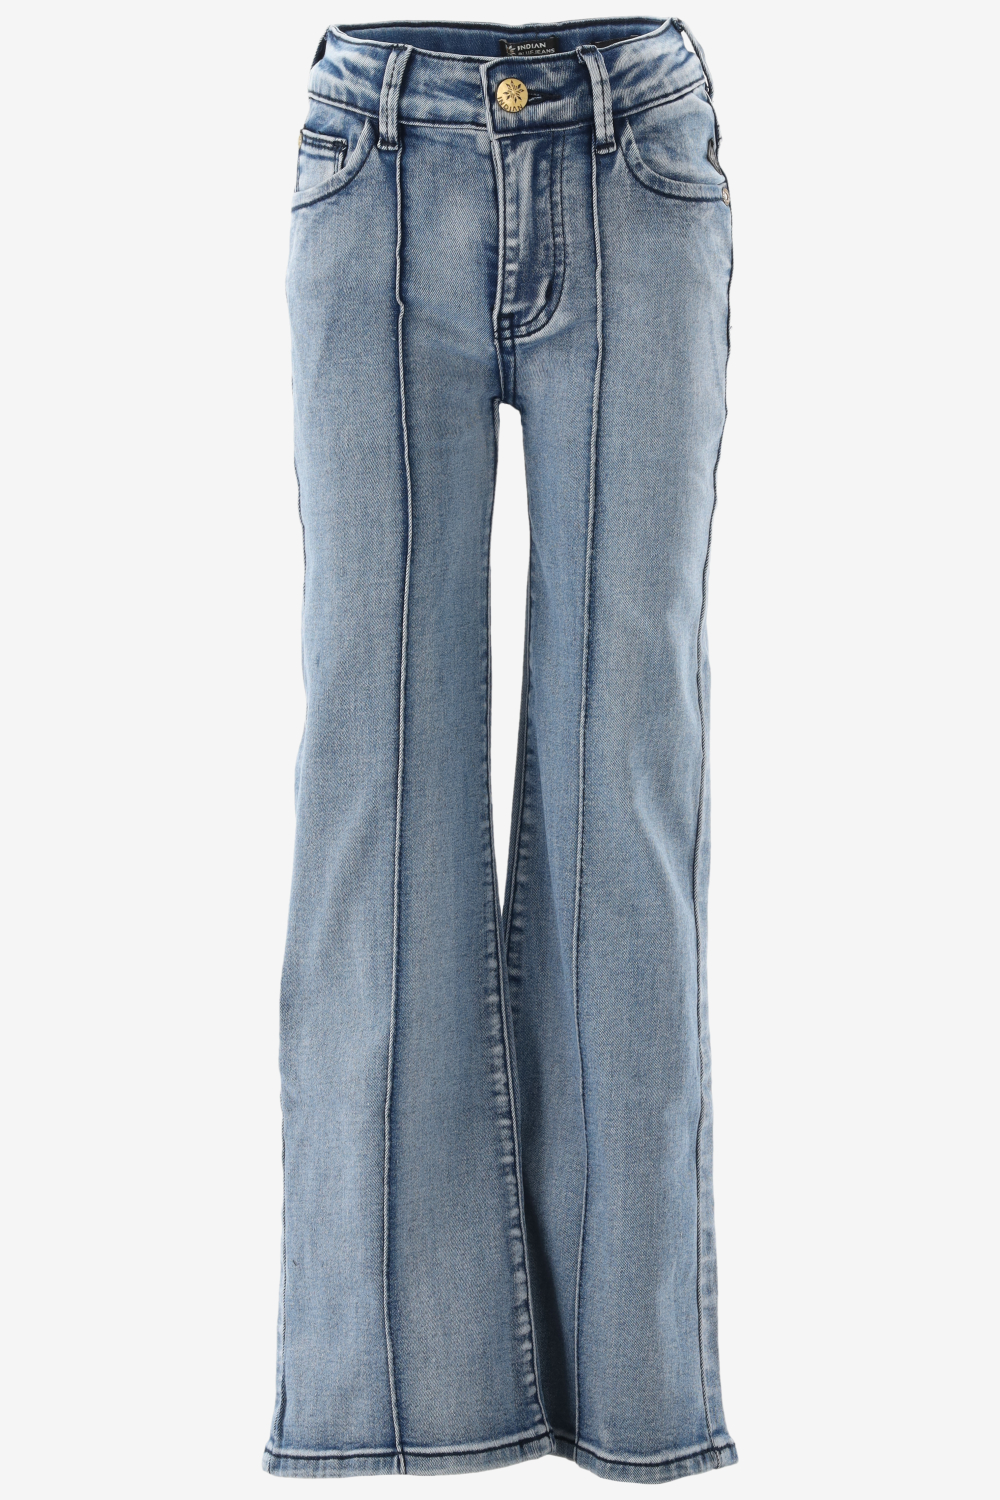 Indian Blue Jeans Lange broek meisje dark denim maat 146